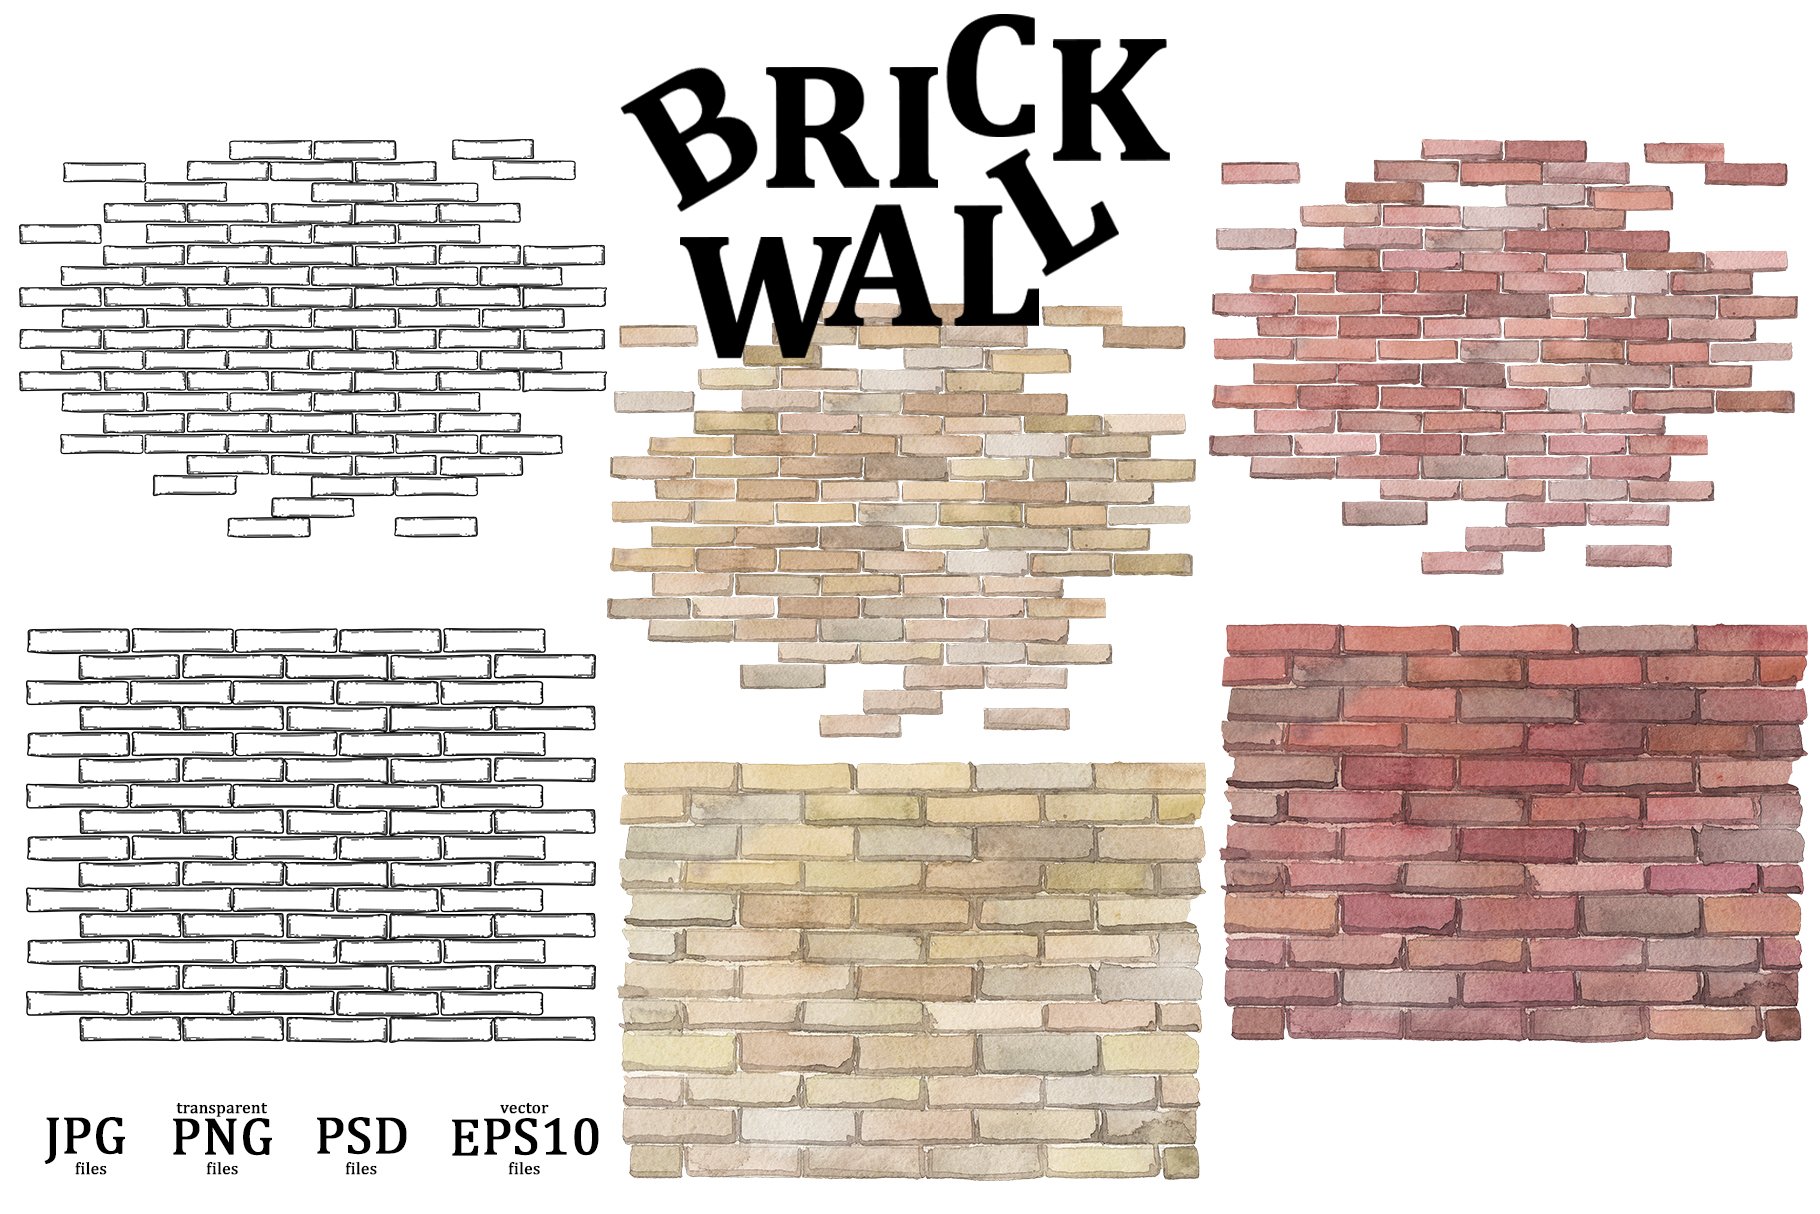 Diverse of bricks.